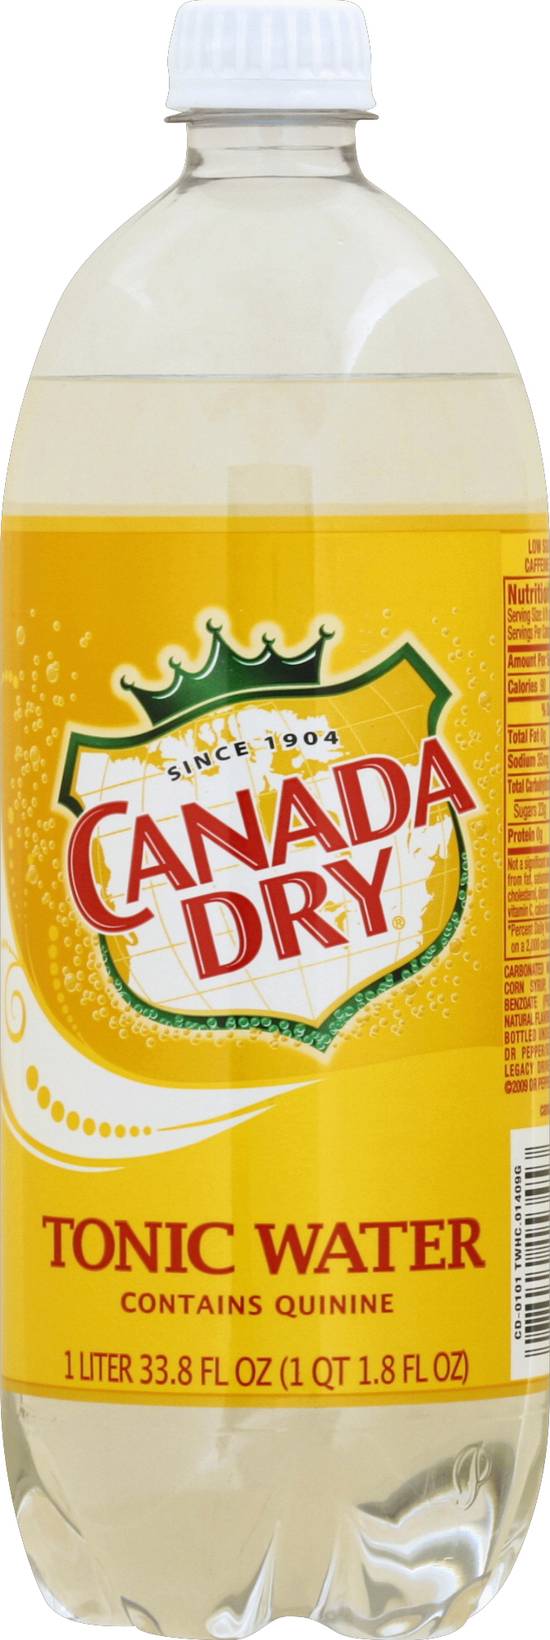 Canada Dry Tonic Water (33.8 fl oz)